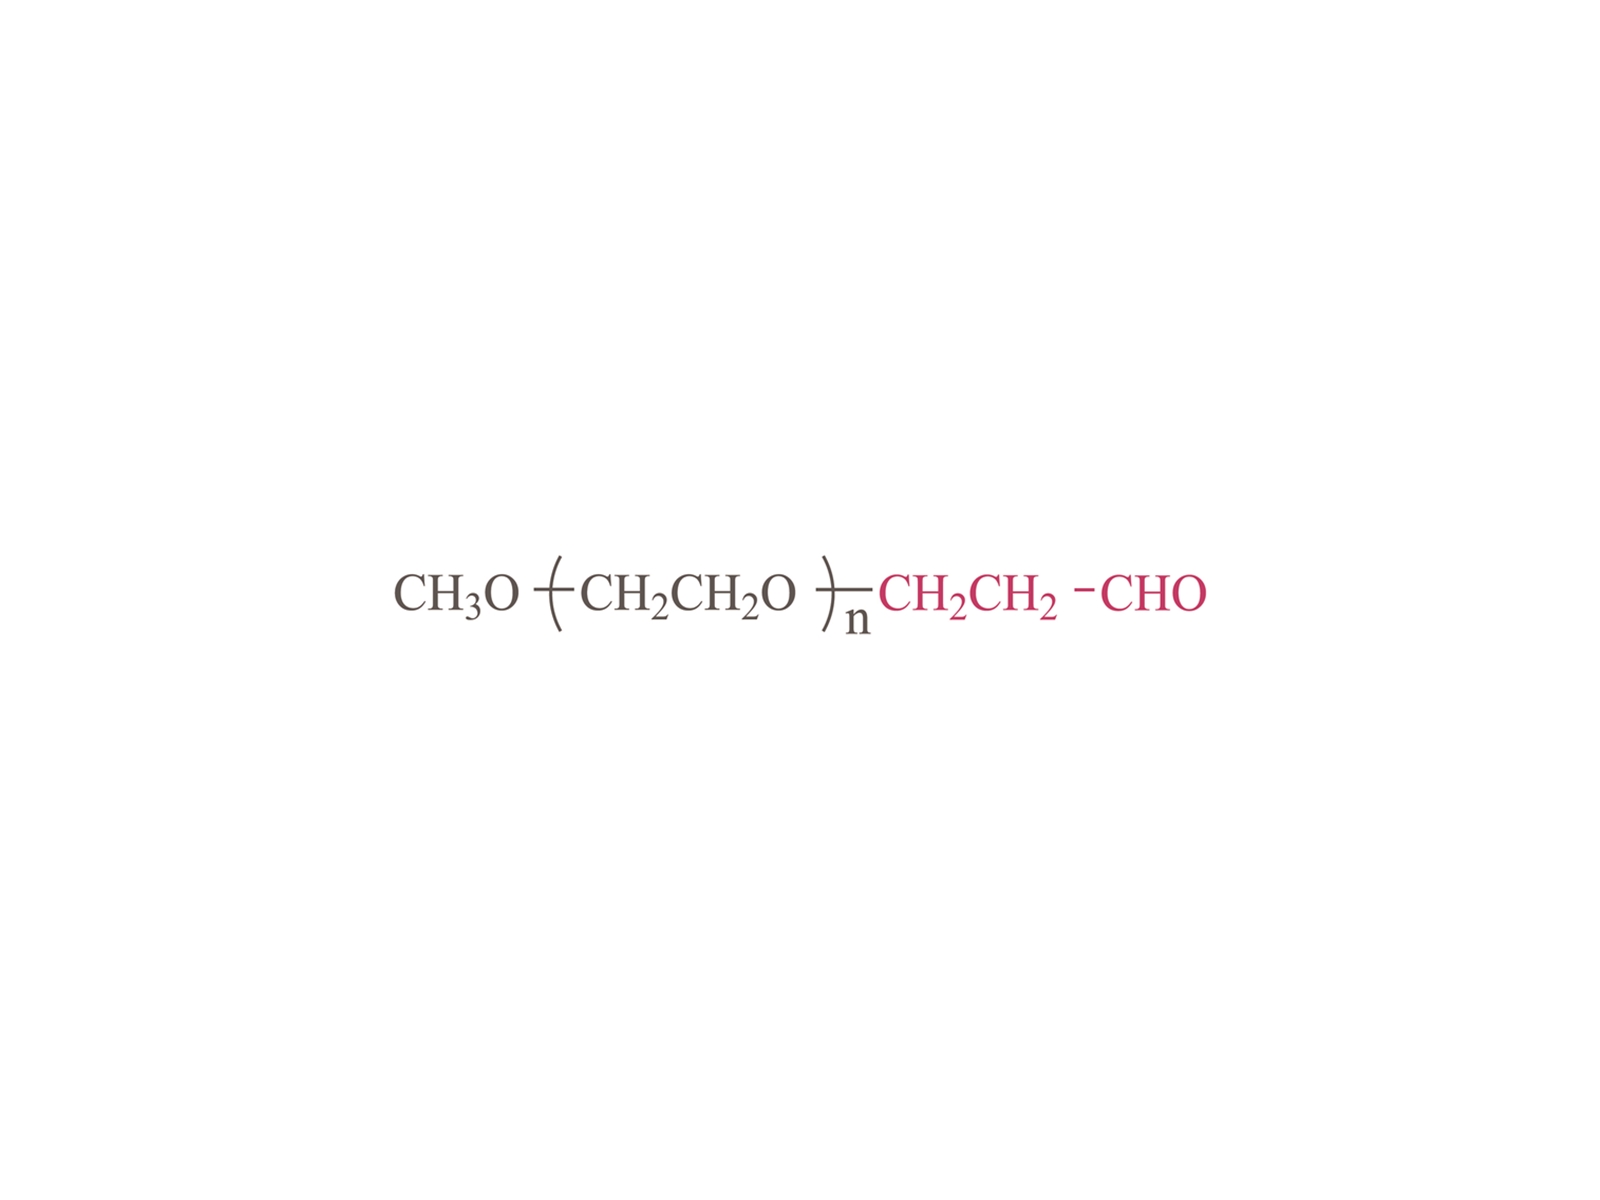 Methoxypoly (ethyleenglycol) propionaldehyde [MPEG-PALD] CAS: 125061-88-3